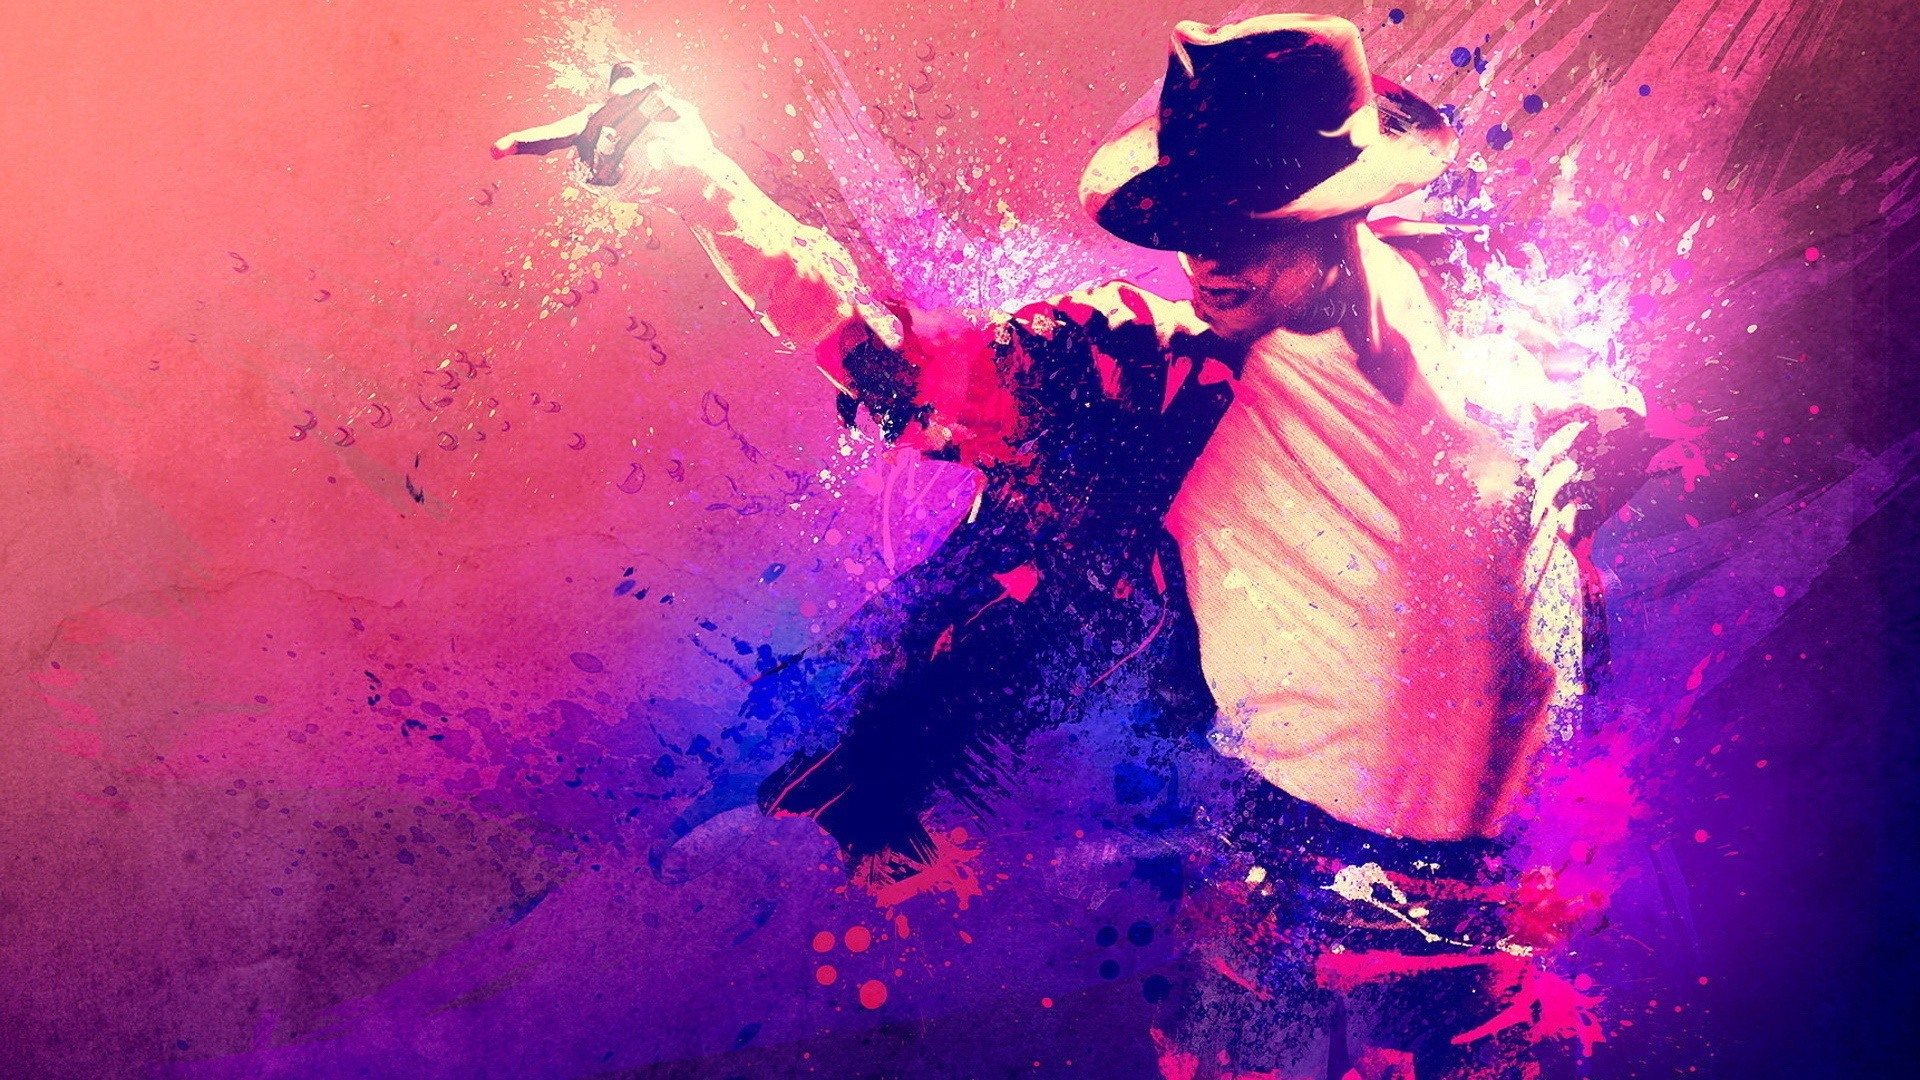 Michael Jackson Artwork   High Definition Wallpapers   HD wallpapers